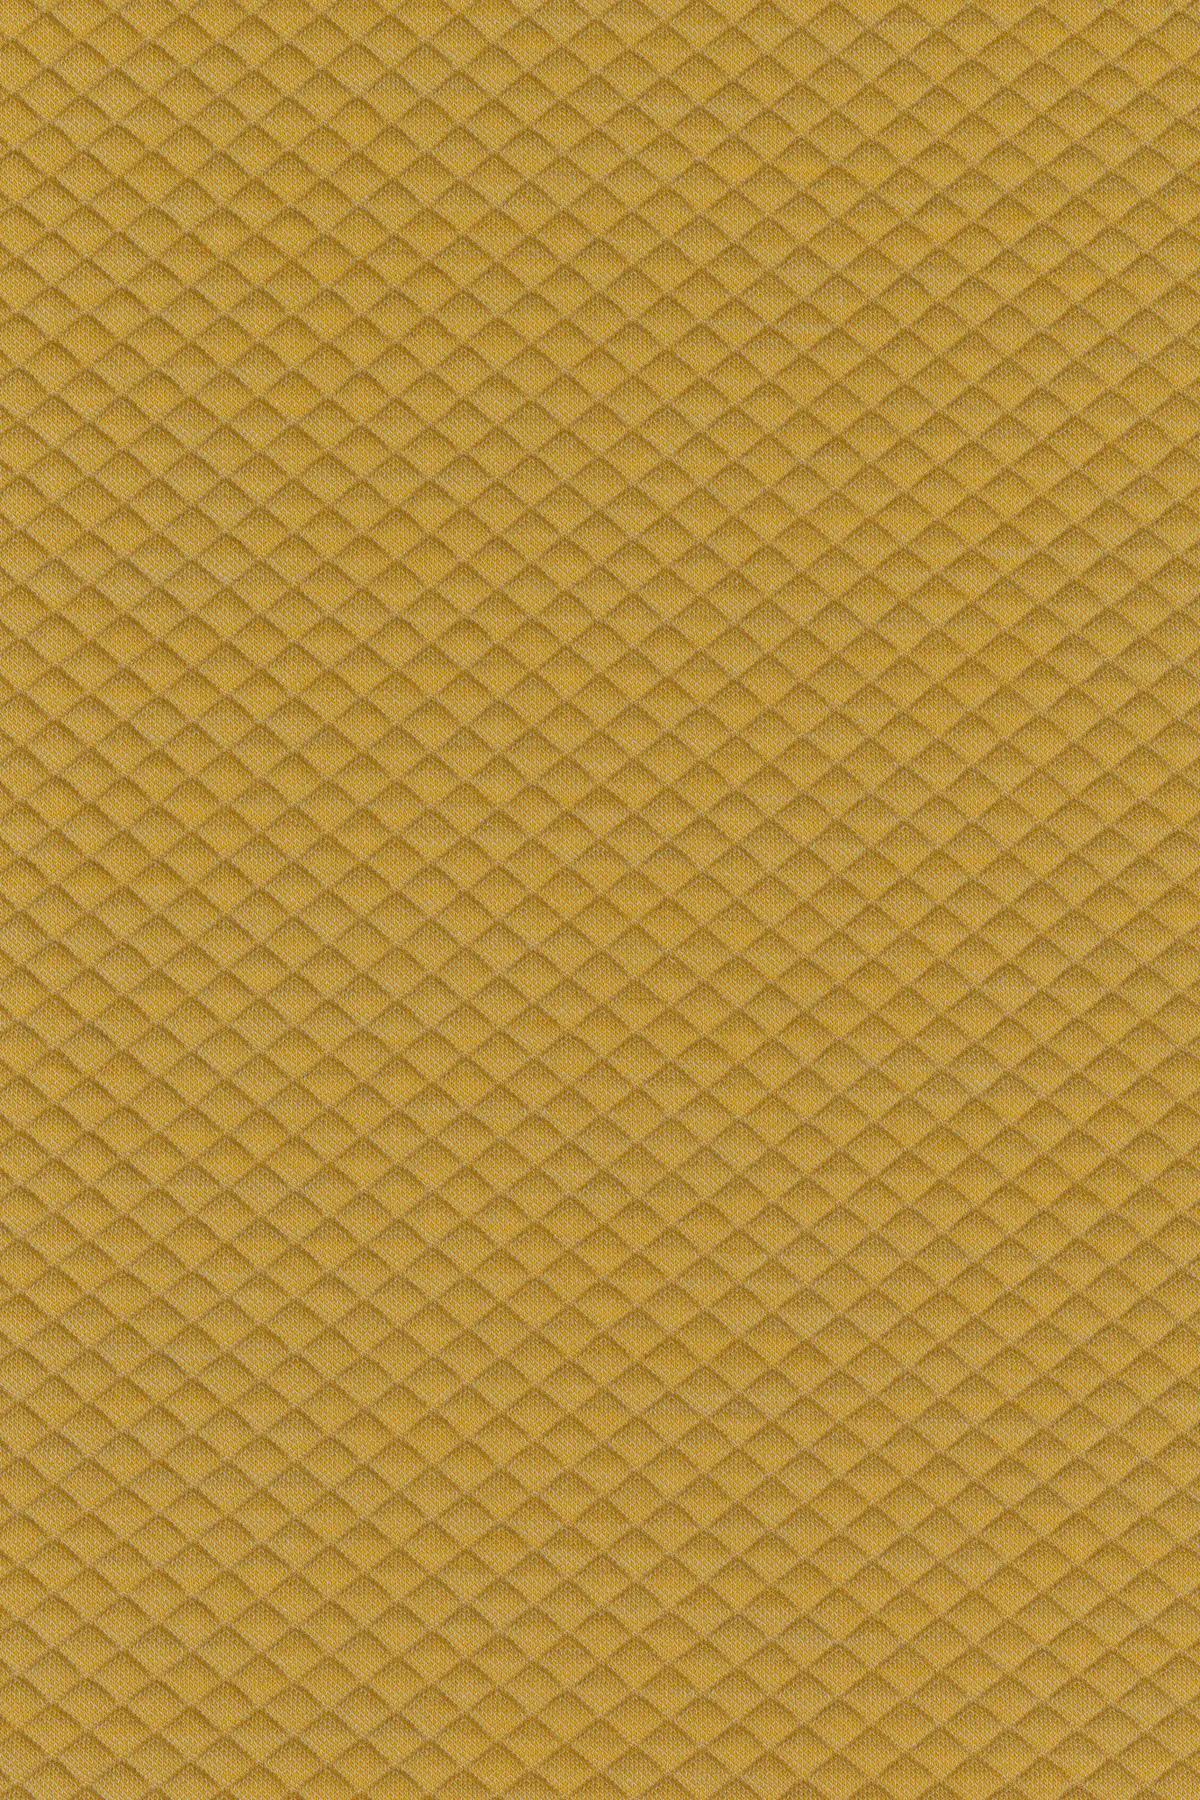 Fabric sample Mosaic 2 0422 yellow